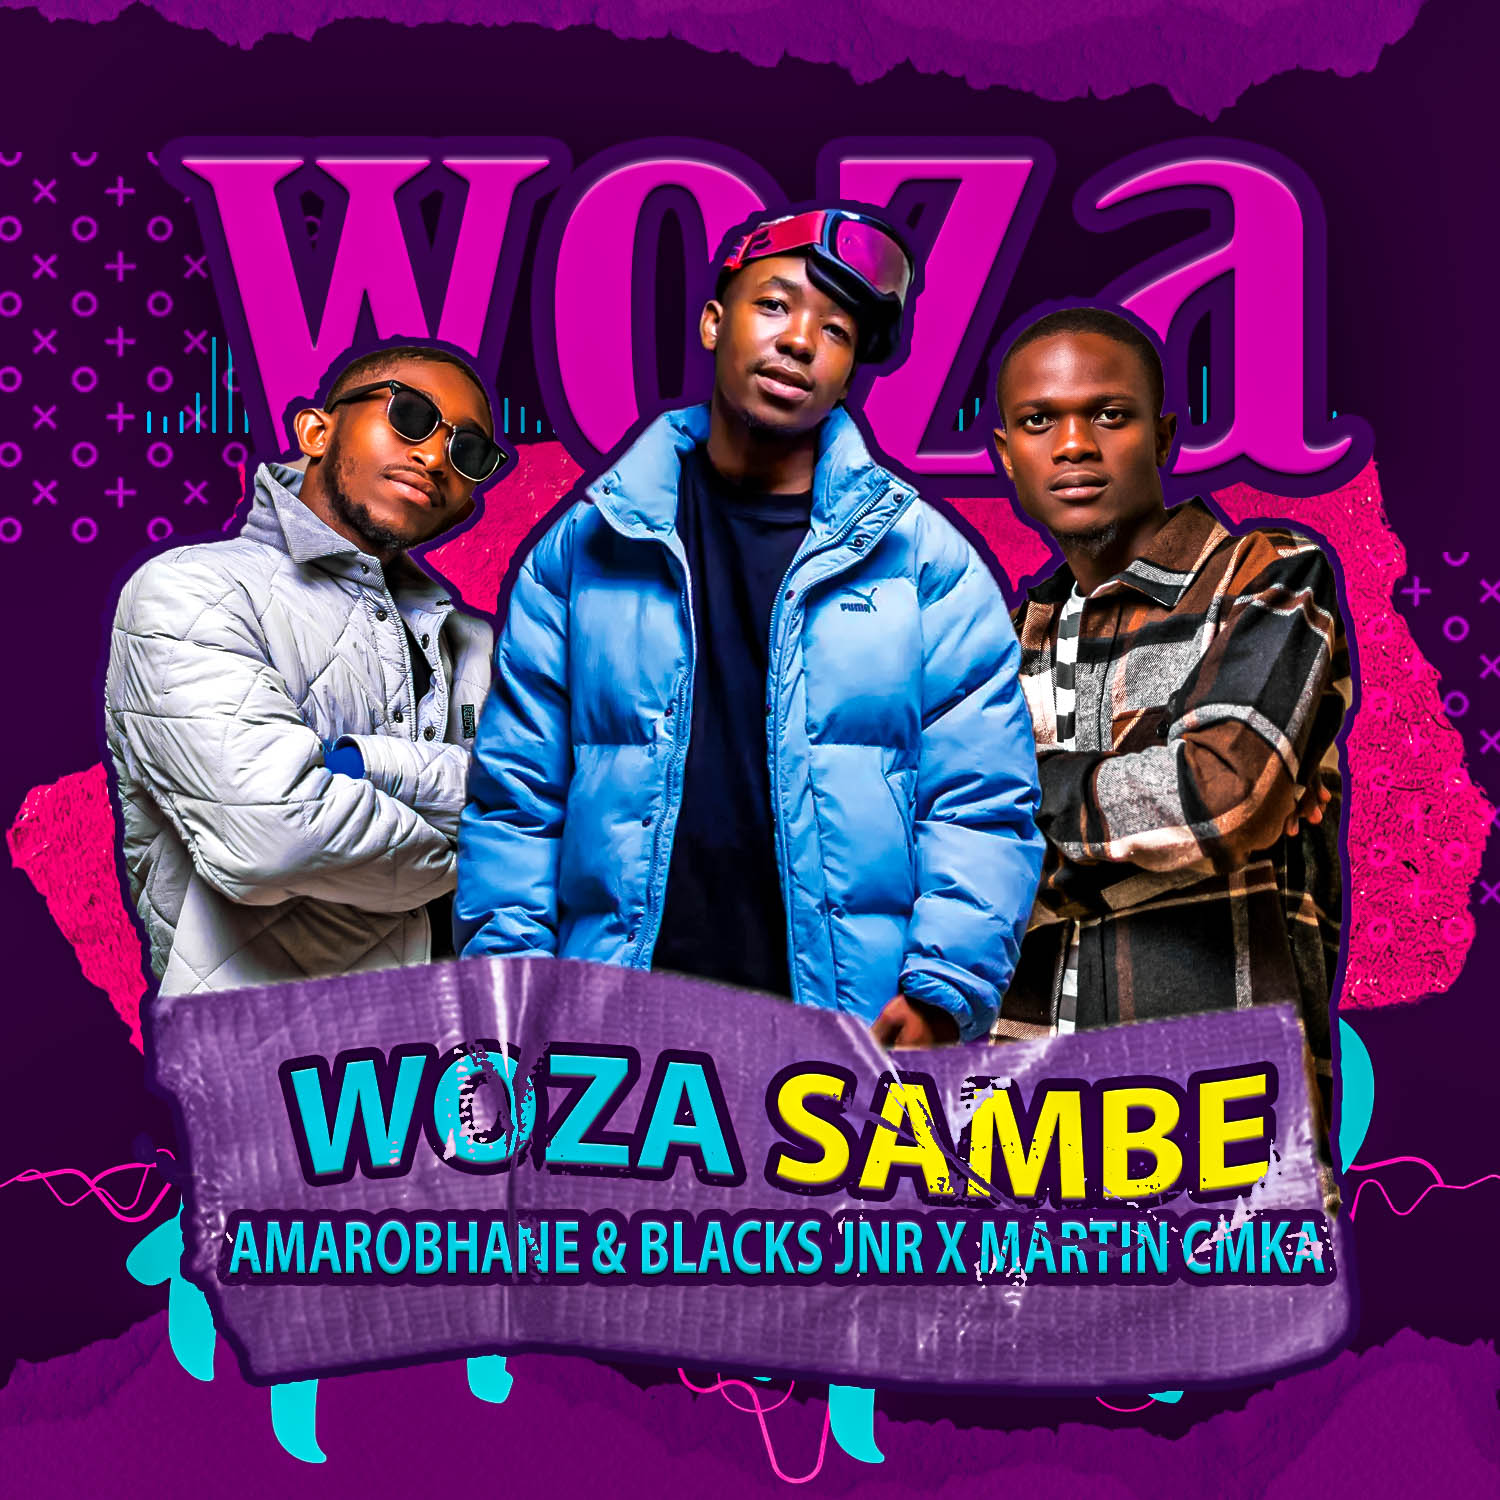 Woza sambe - Amarobhane & Blacks Jnr x Martin